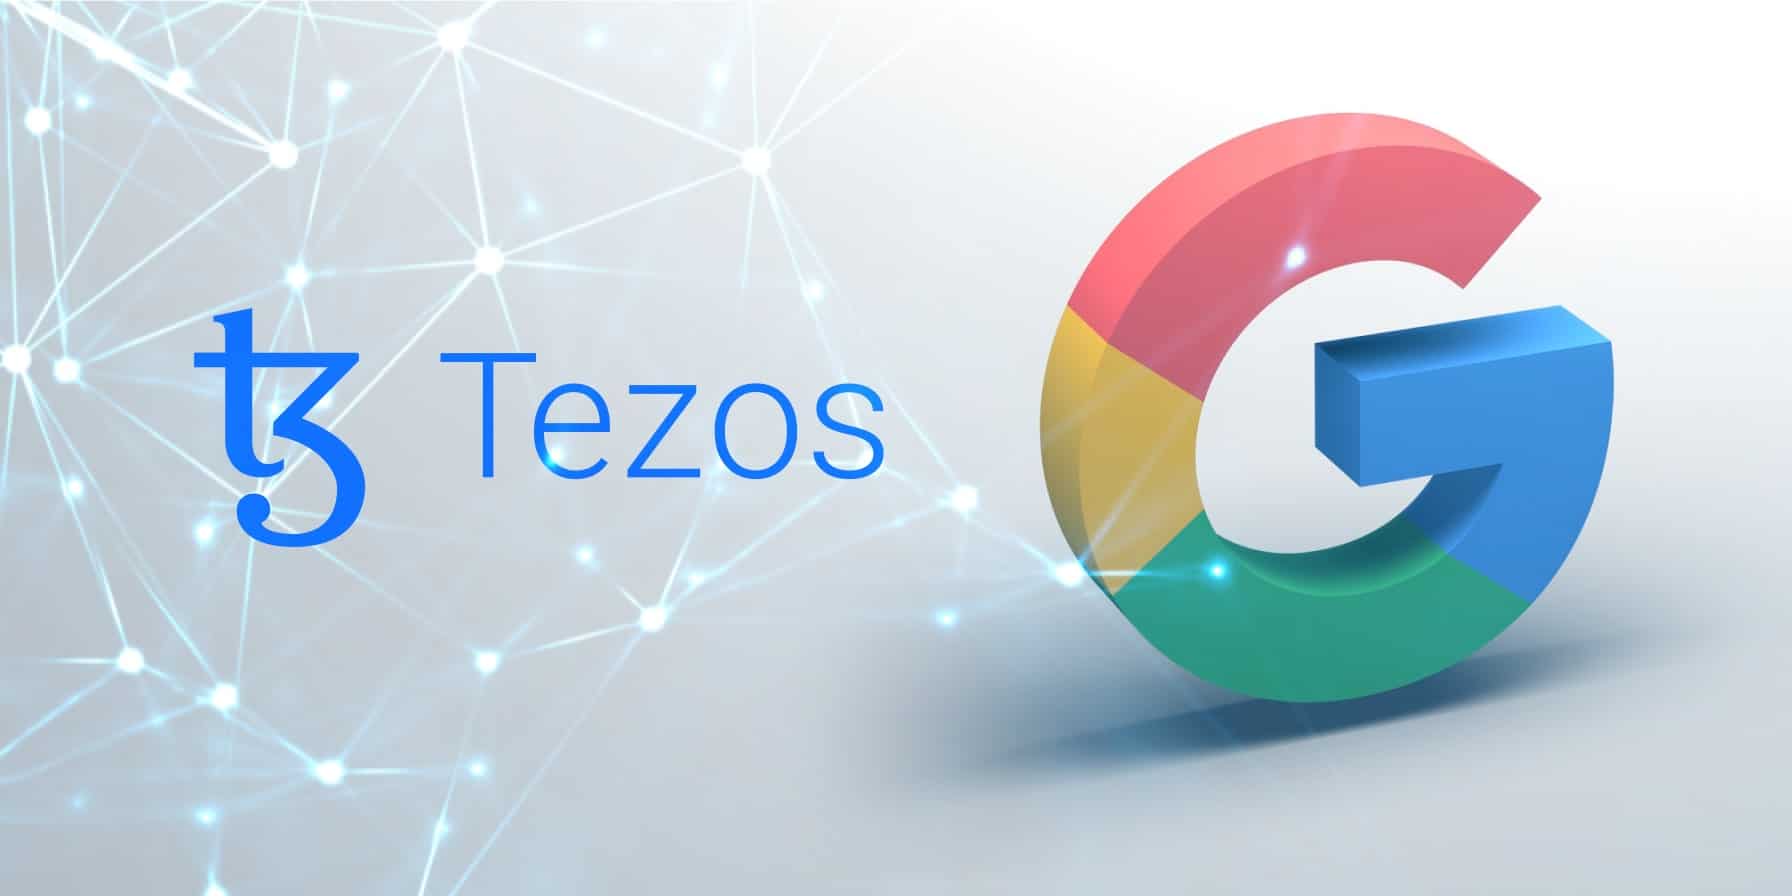 Google Cloud Partners with Tezos Blockchain for Web3 Technology min